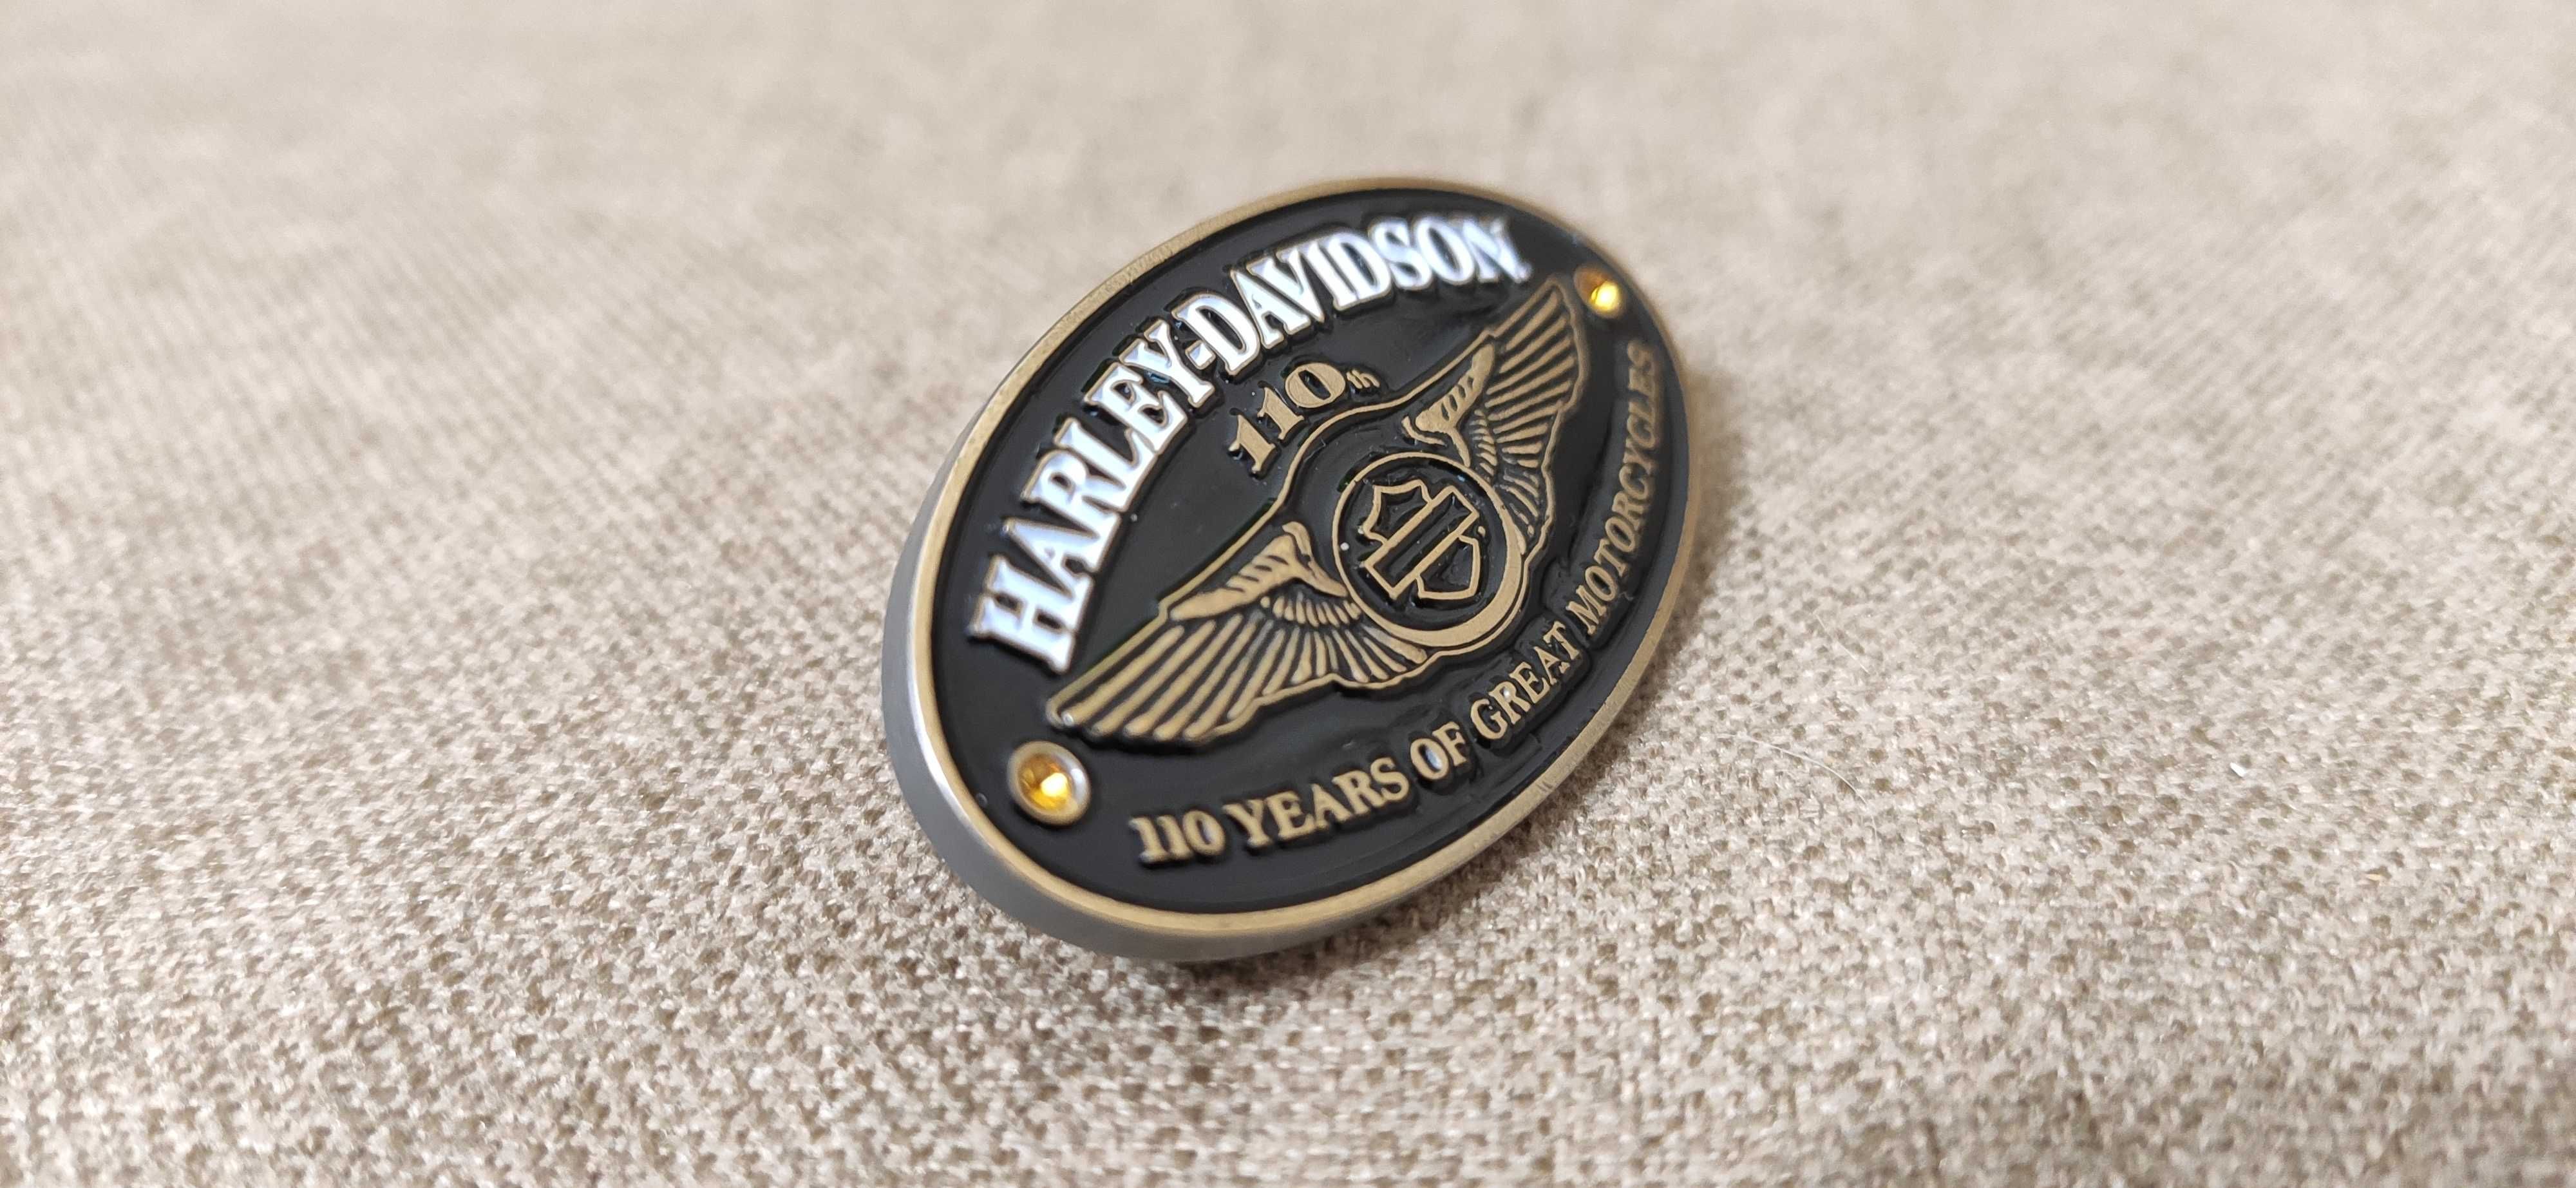 знак Harley Davidson 110 лет